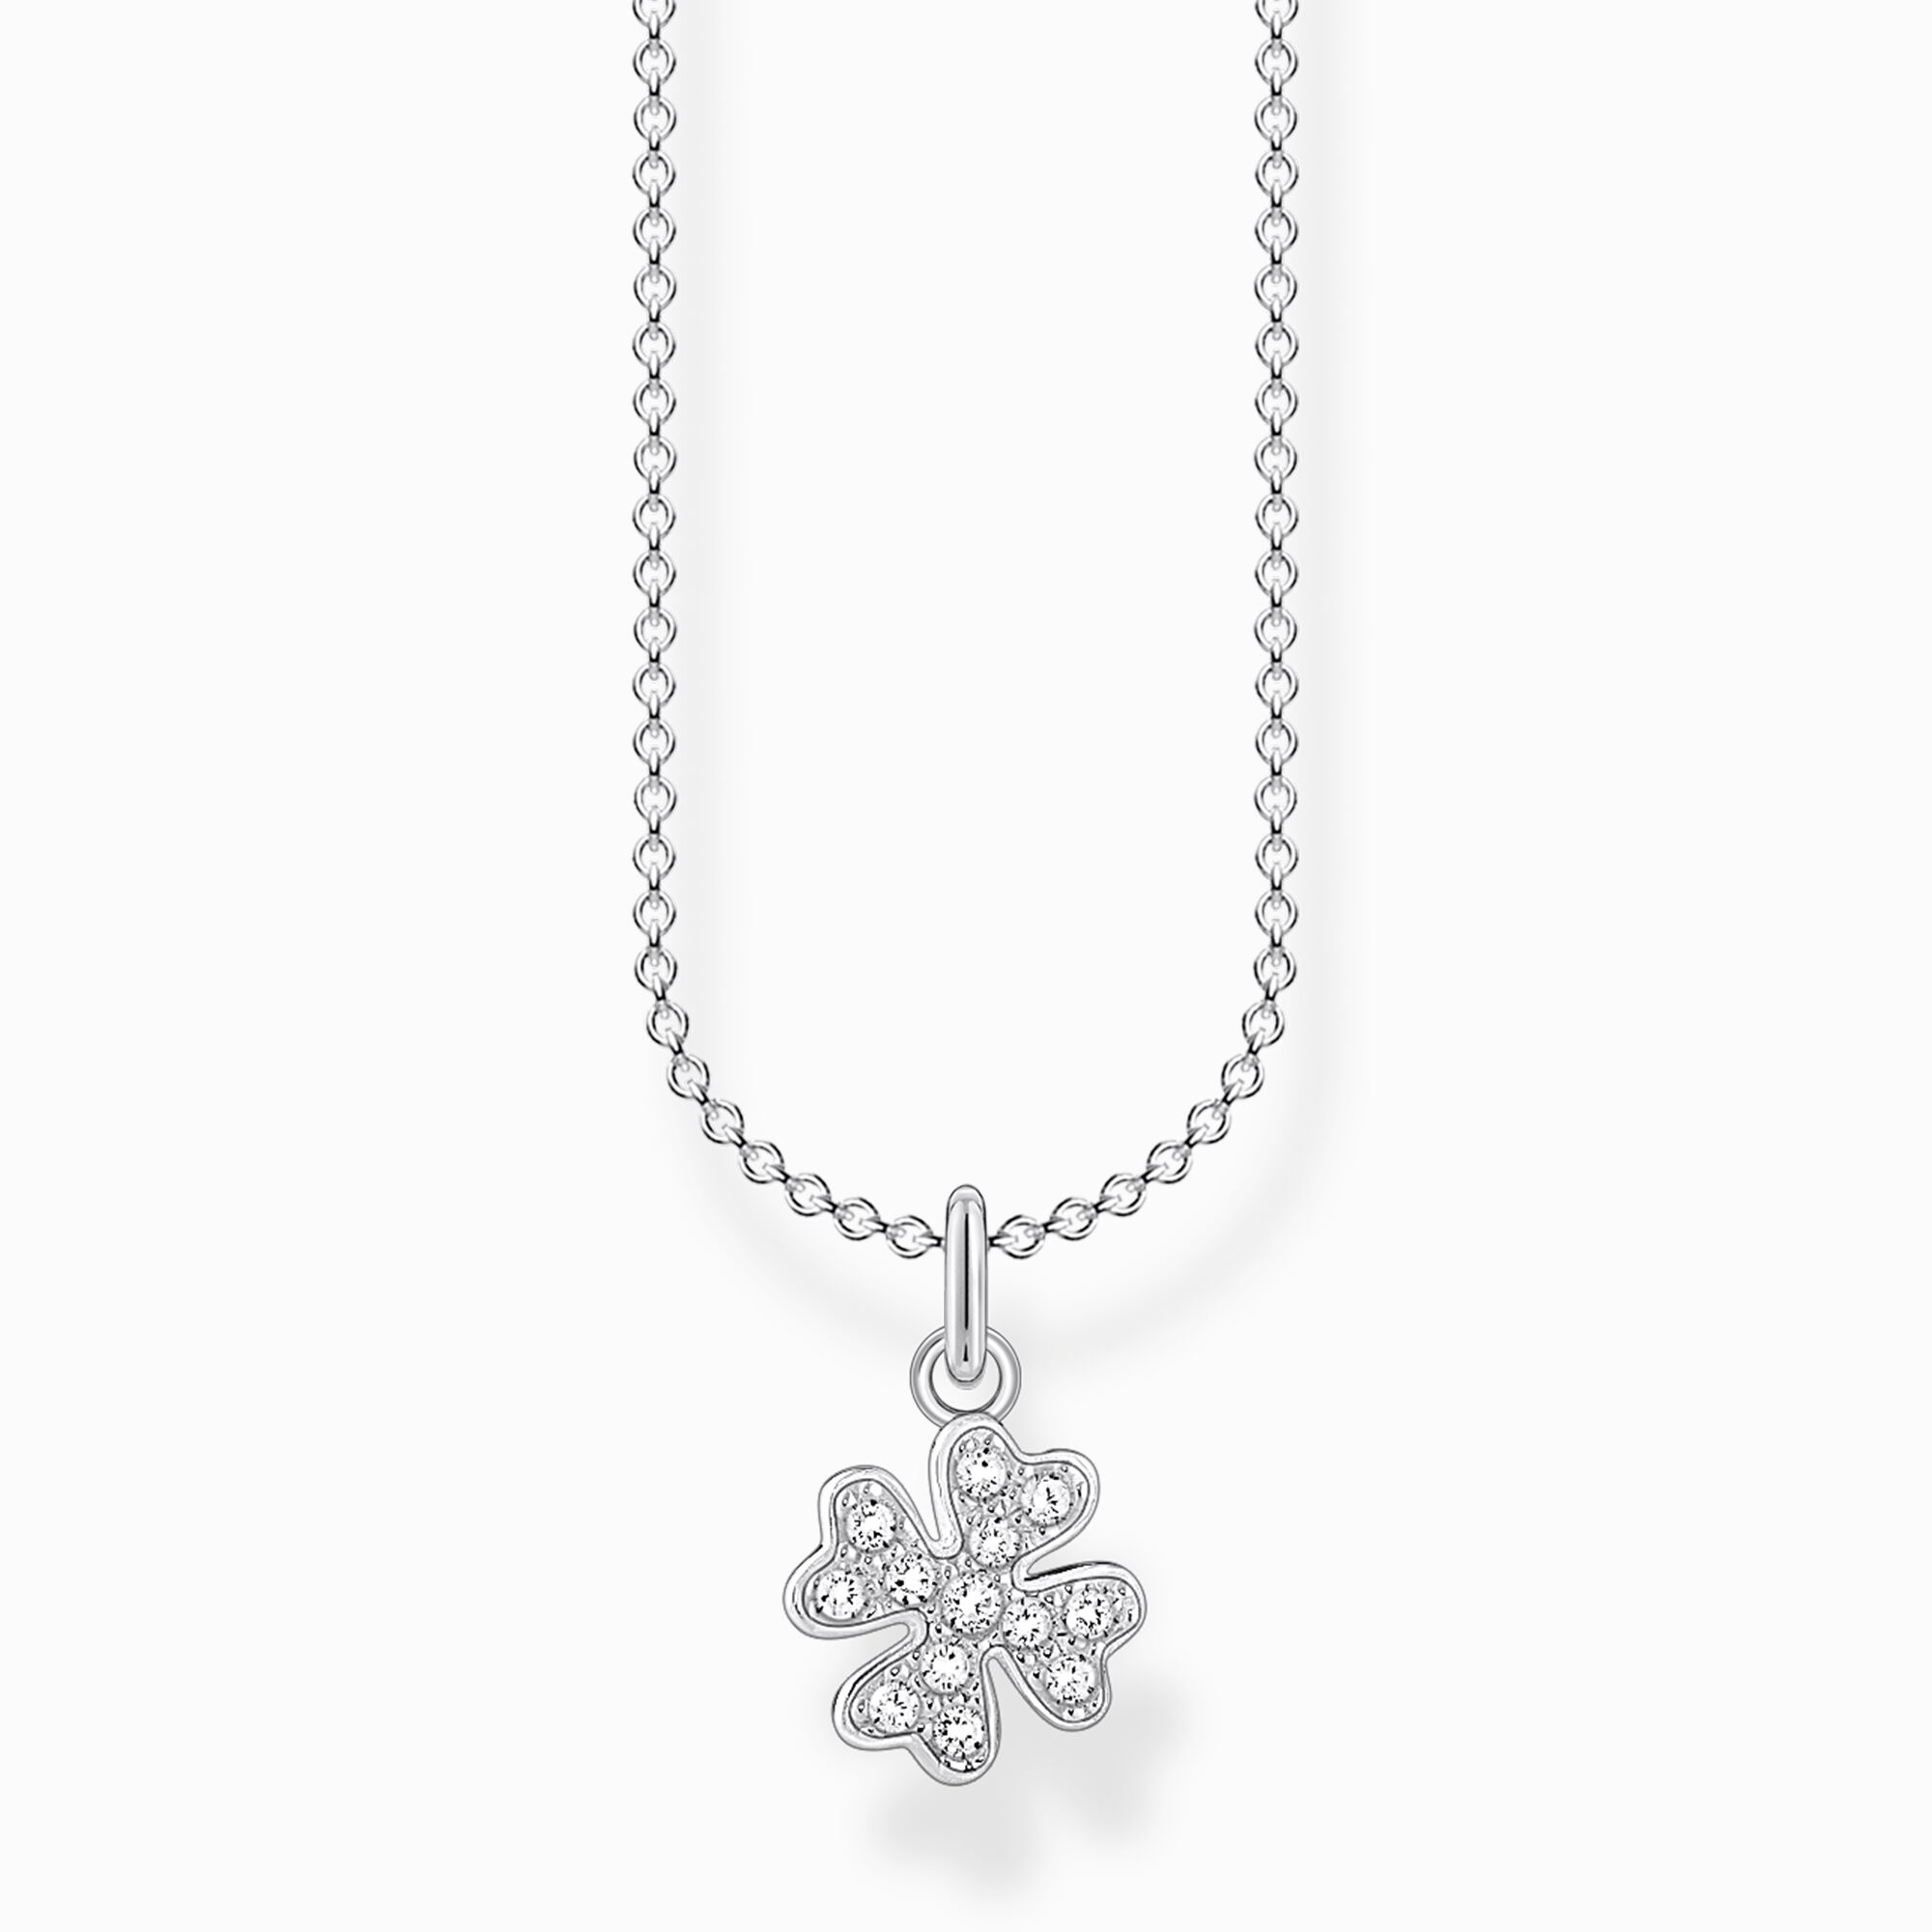 Necklace with cloverleaf pendant – THOMAS SABO